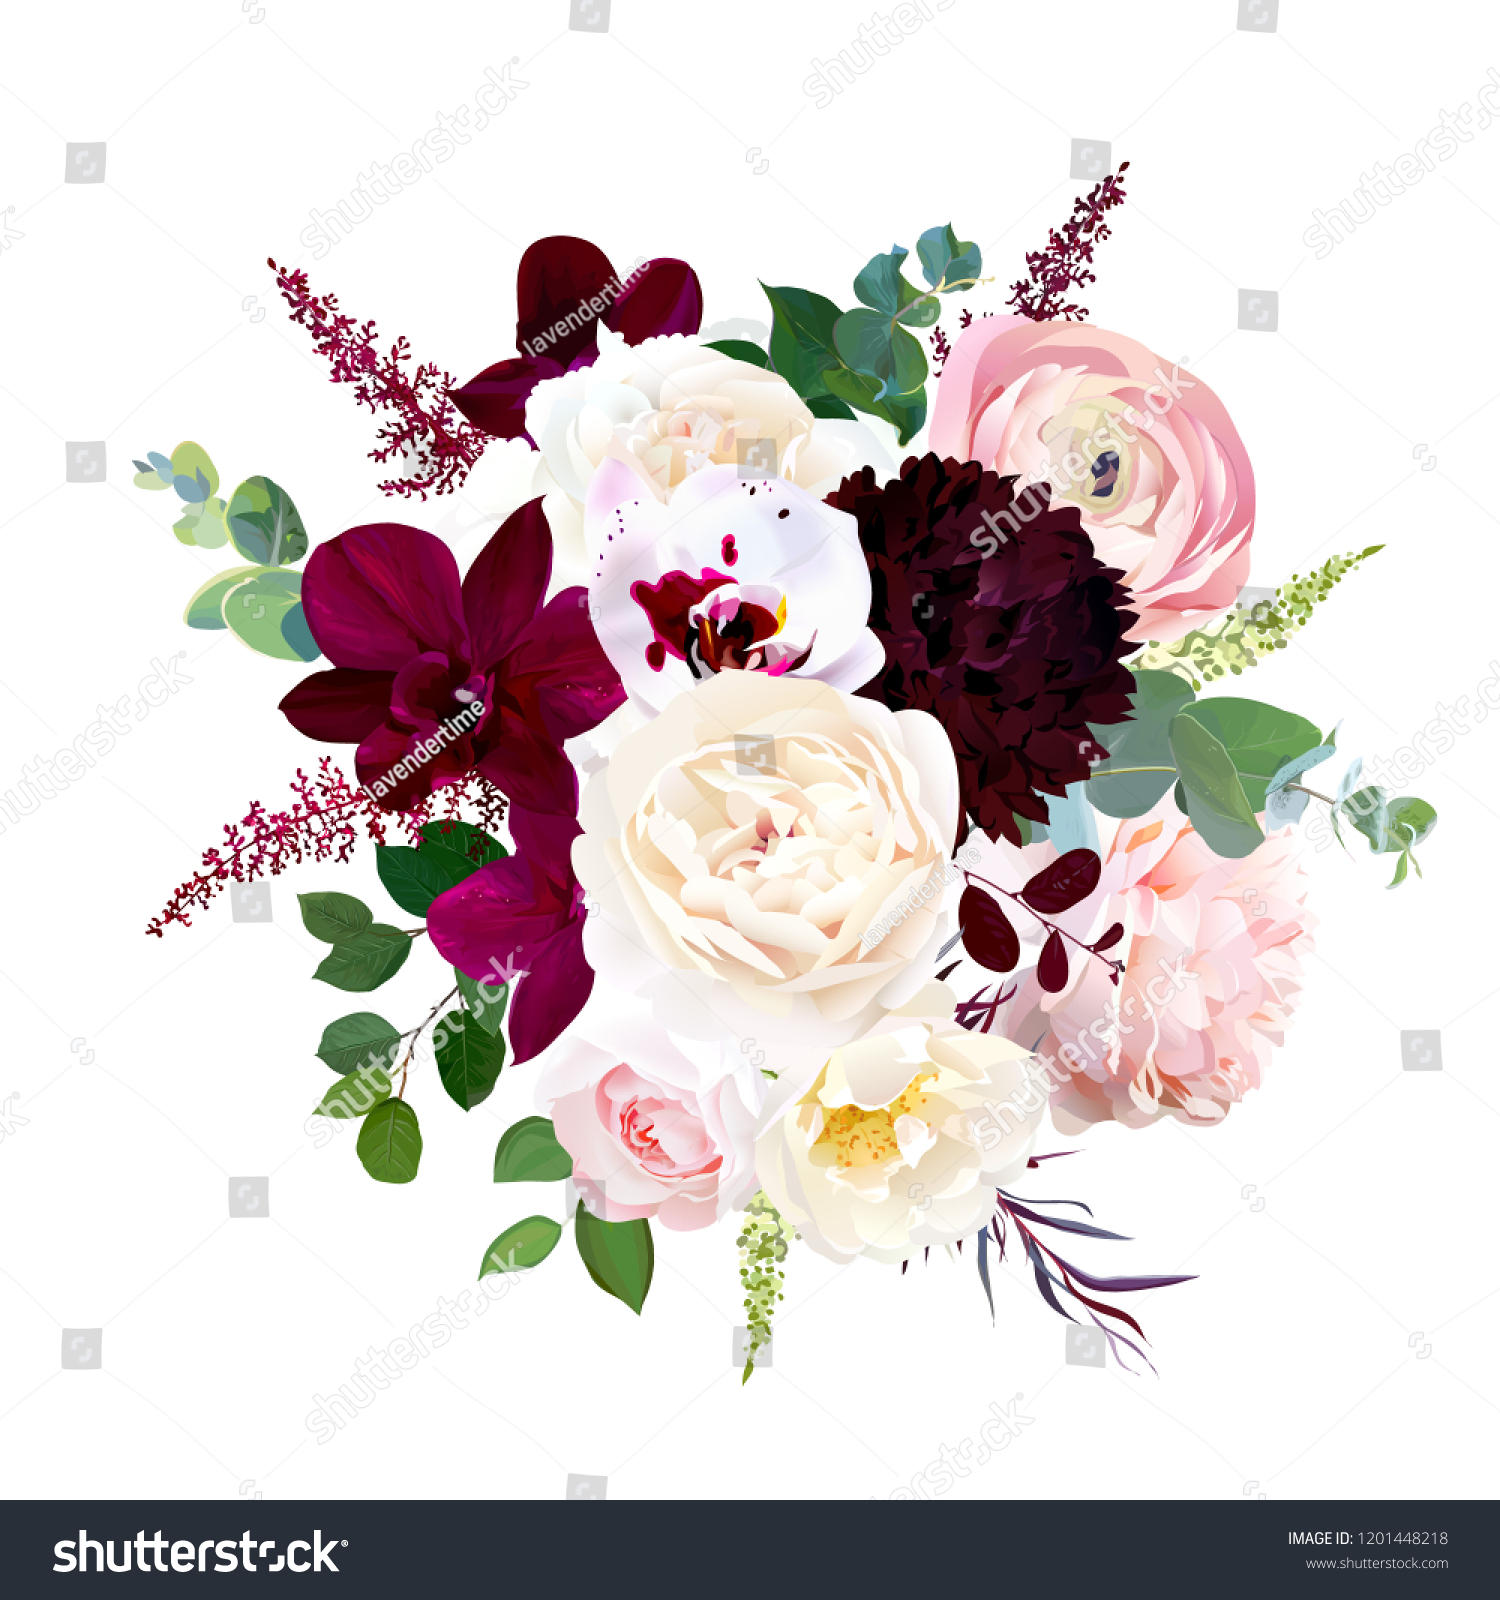 Luxury Fall Flowers Vector Bouquet Dark Stock Vector Royalty Free 1201448218